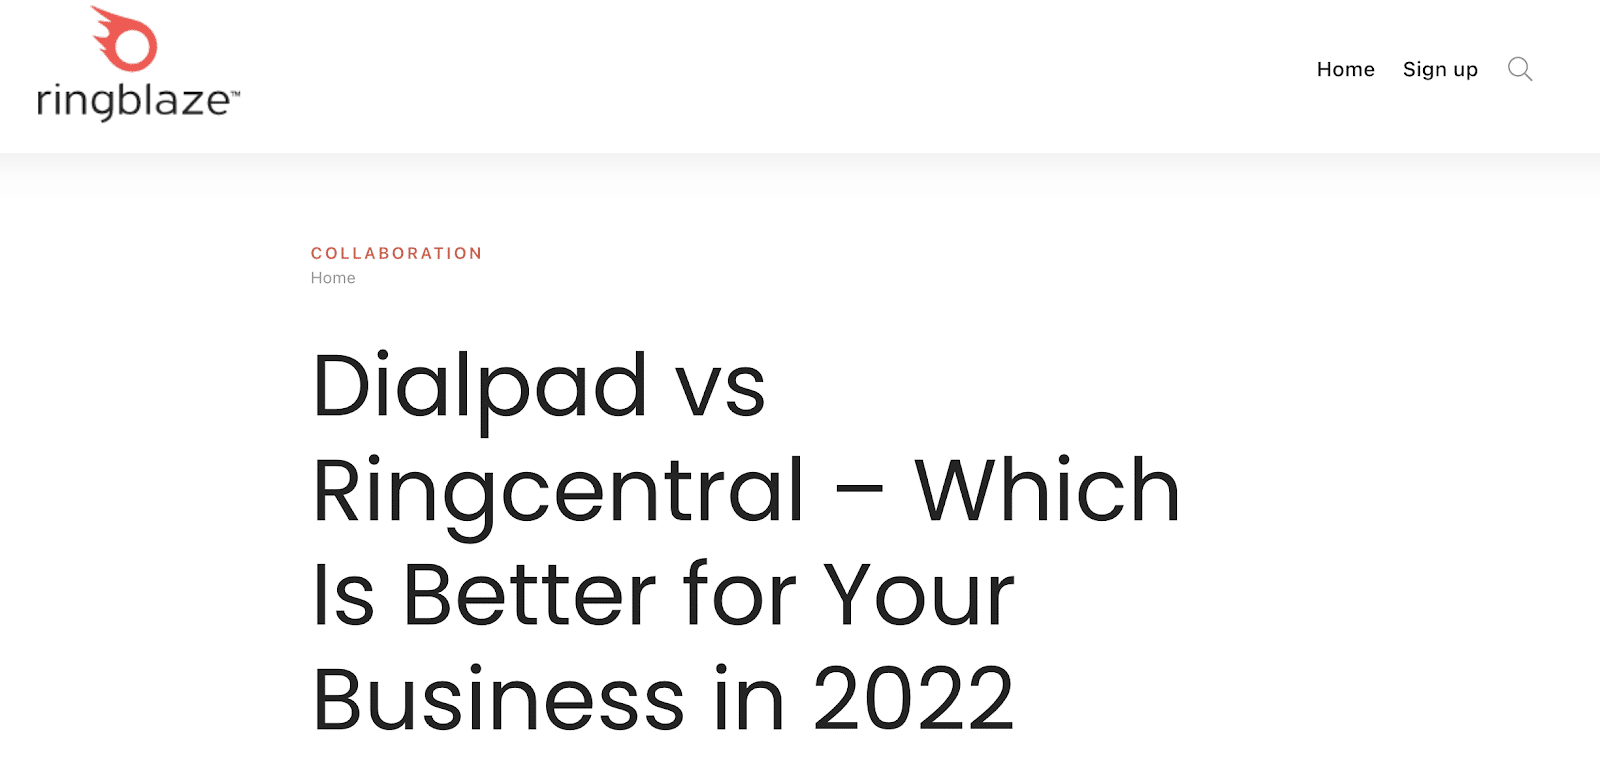 Quoleady's client Ringblaze blog topic: Dialpad vs Ringcentral